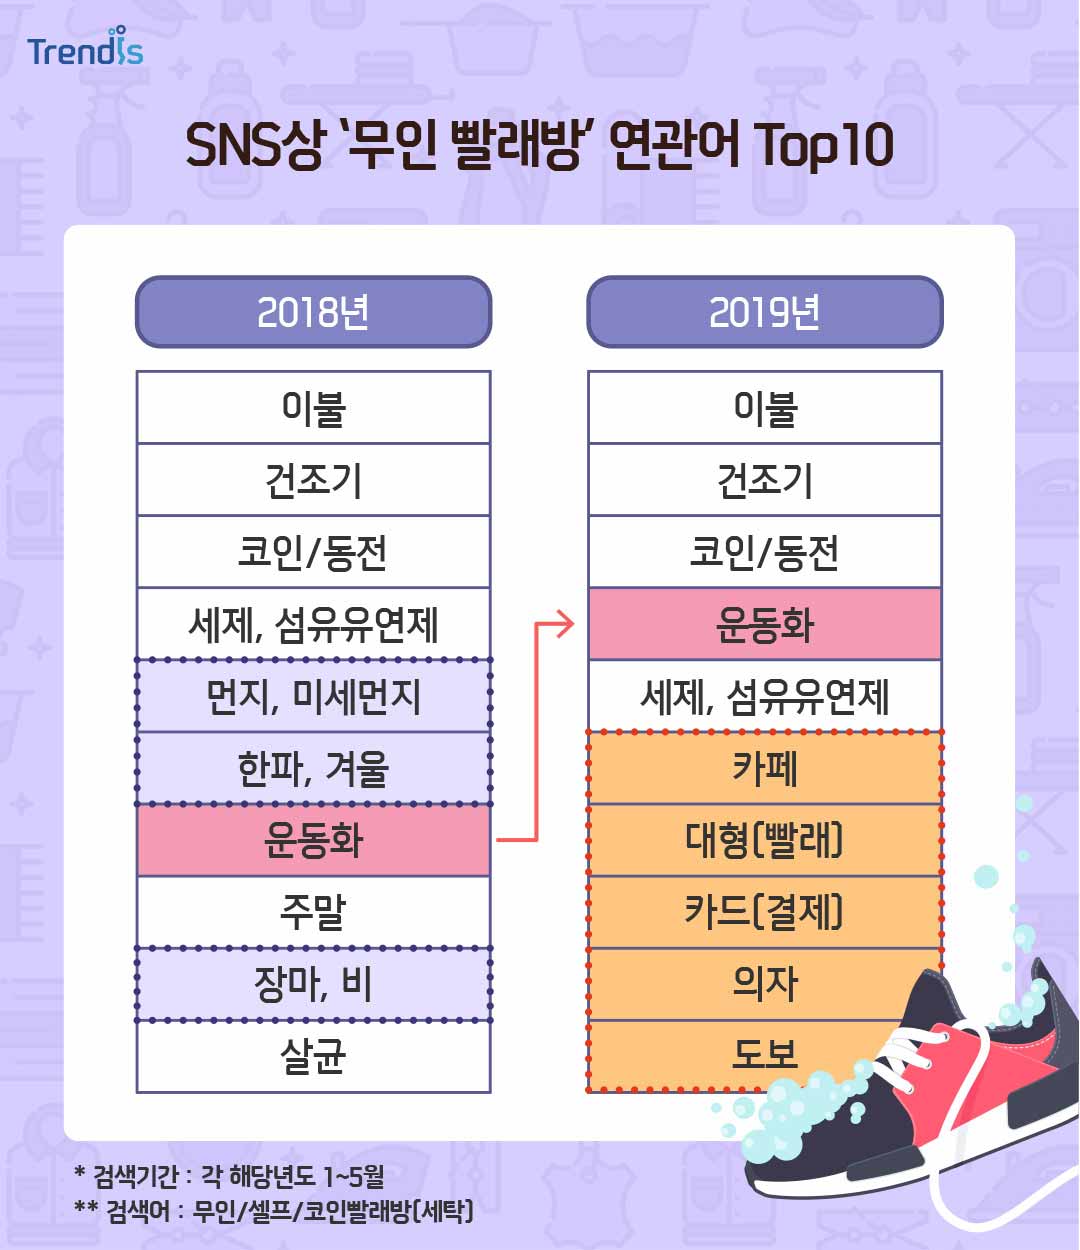 SNS상 ‘무인 빨래방’ 연관어 Top10 차트